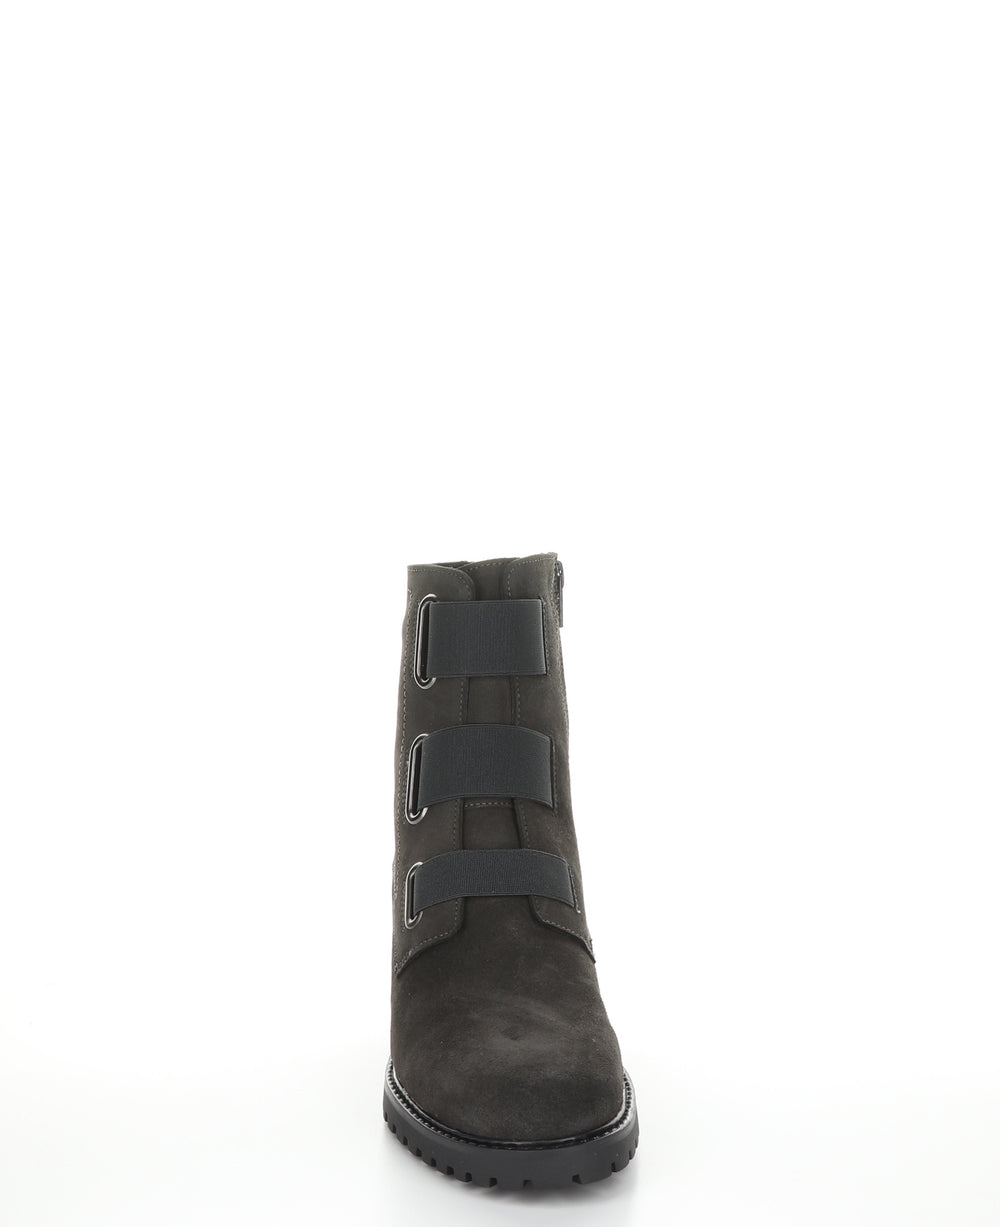 INDIE Grey Zip Up Boots|INDIE Bottes avec Fermeture Zippée in Gris